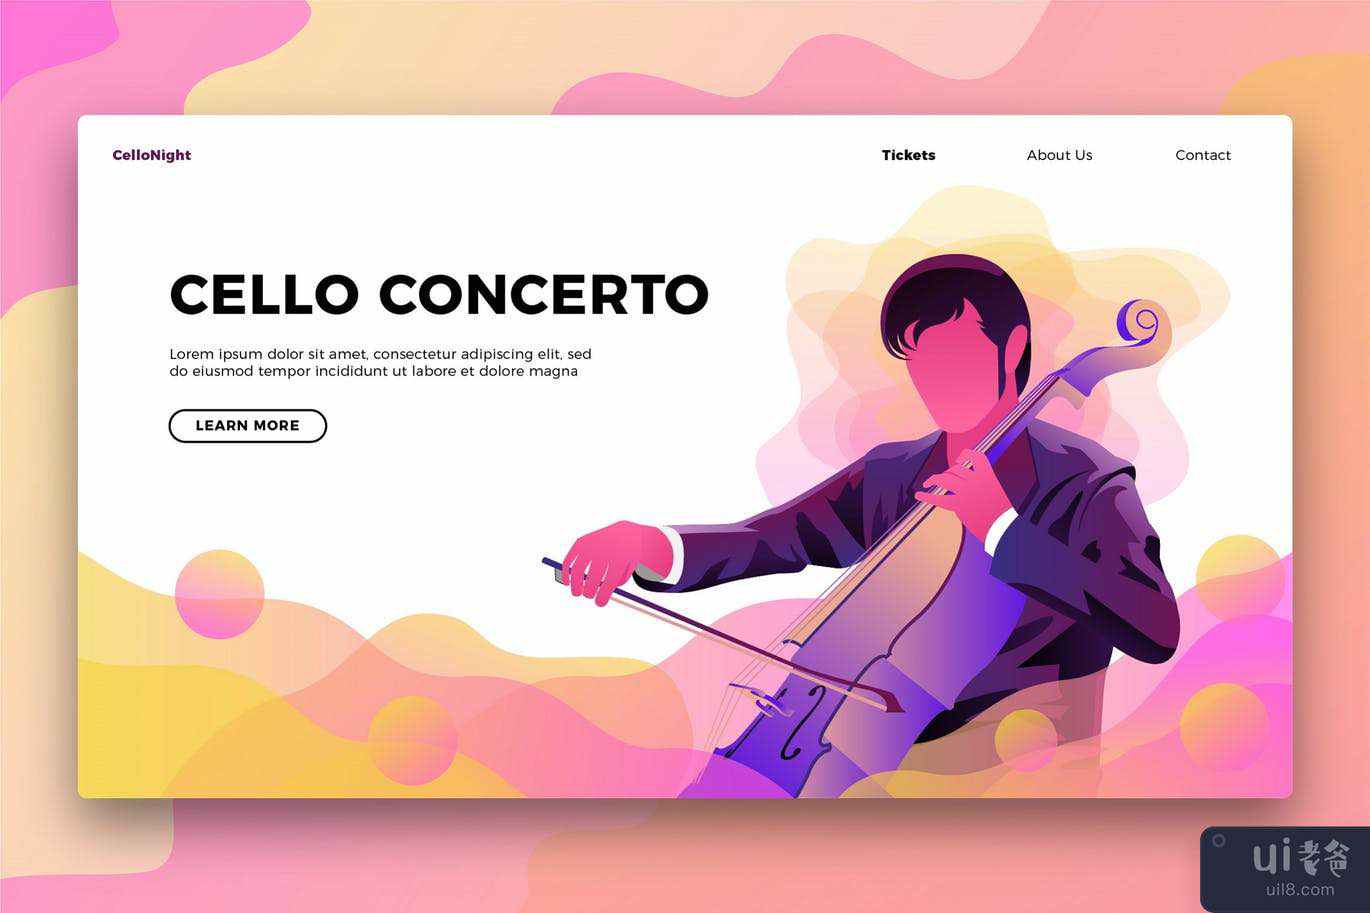 大提琴音乐 - 横幅和登陆页面(Cello Music - Banner & Landing Page)插图